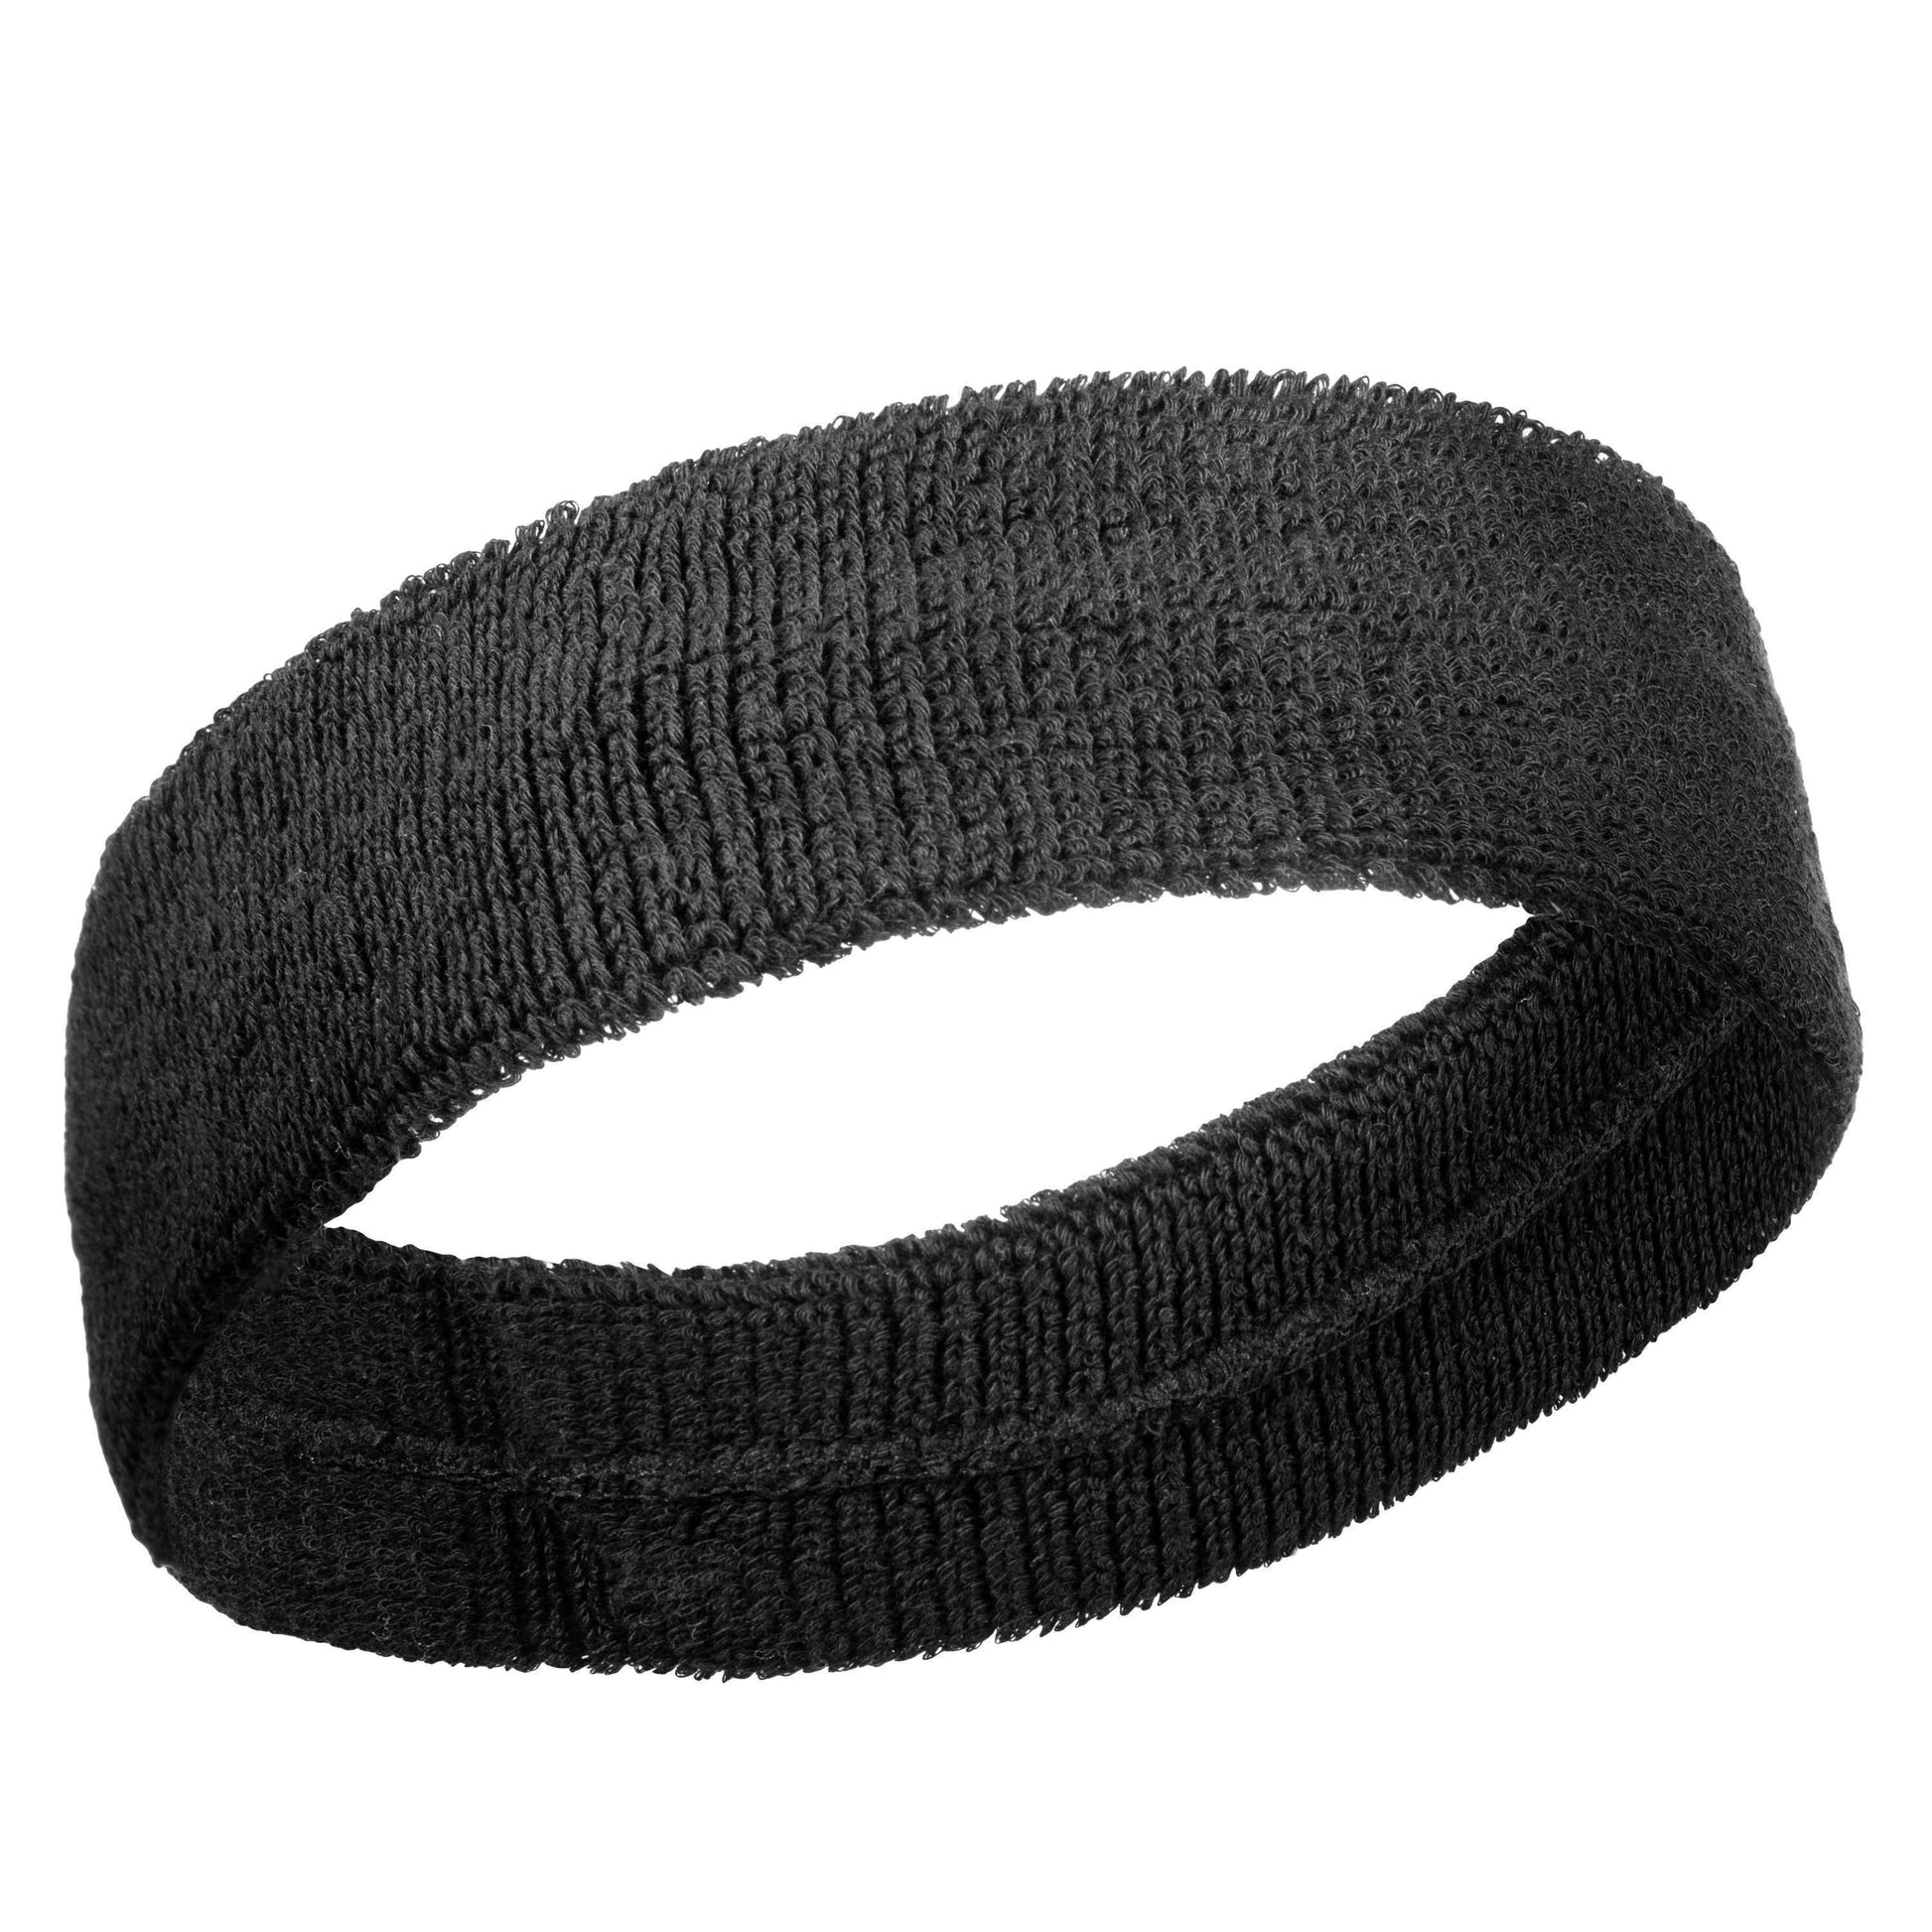 Suddora Headband - Black